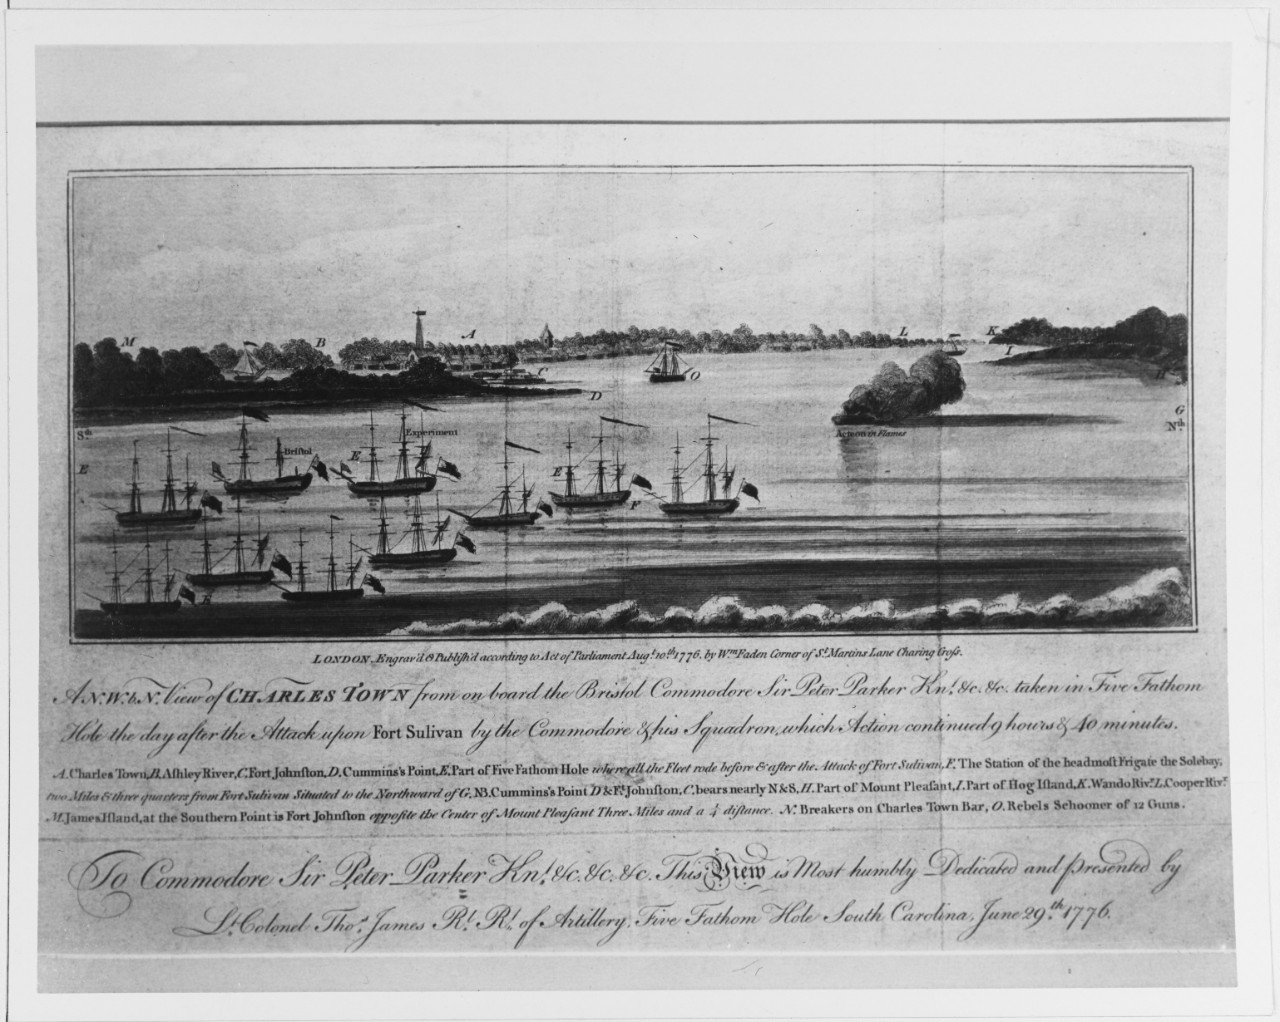 Charlestown in 1776 by William Faden